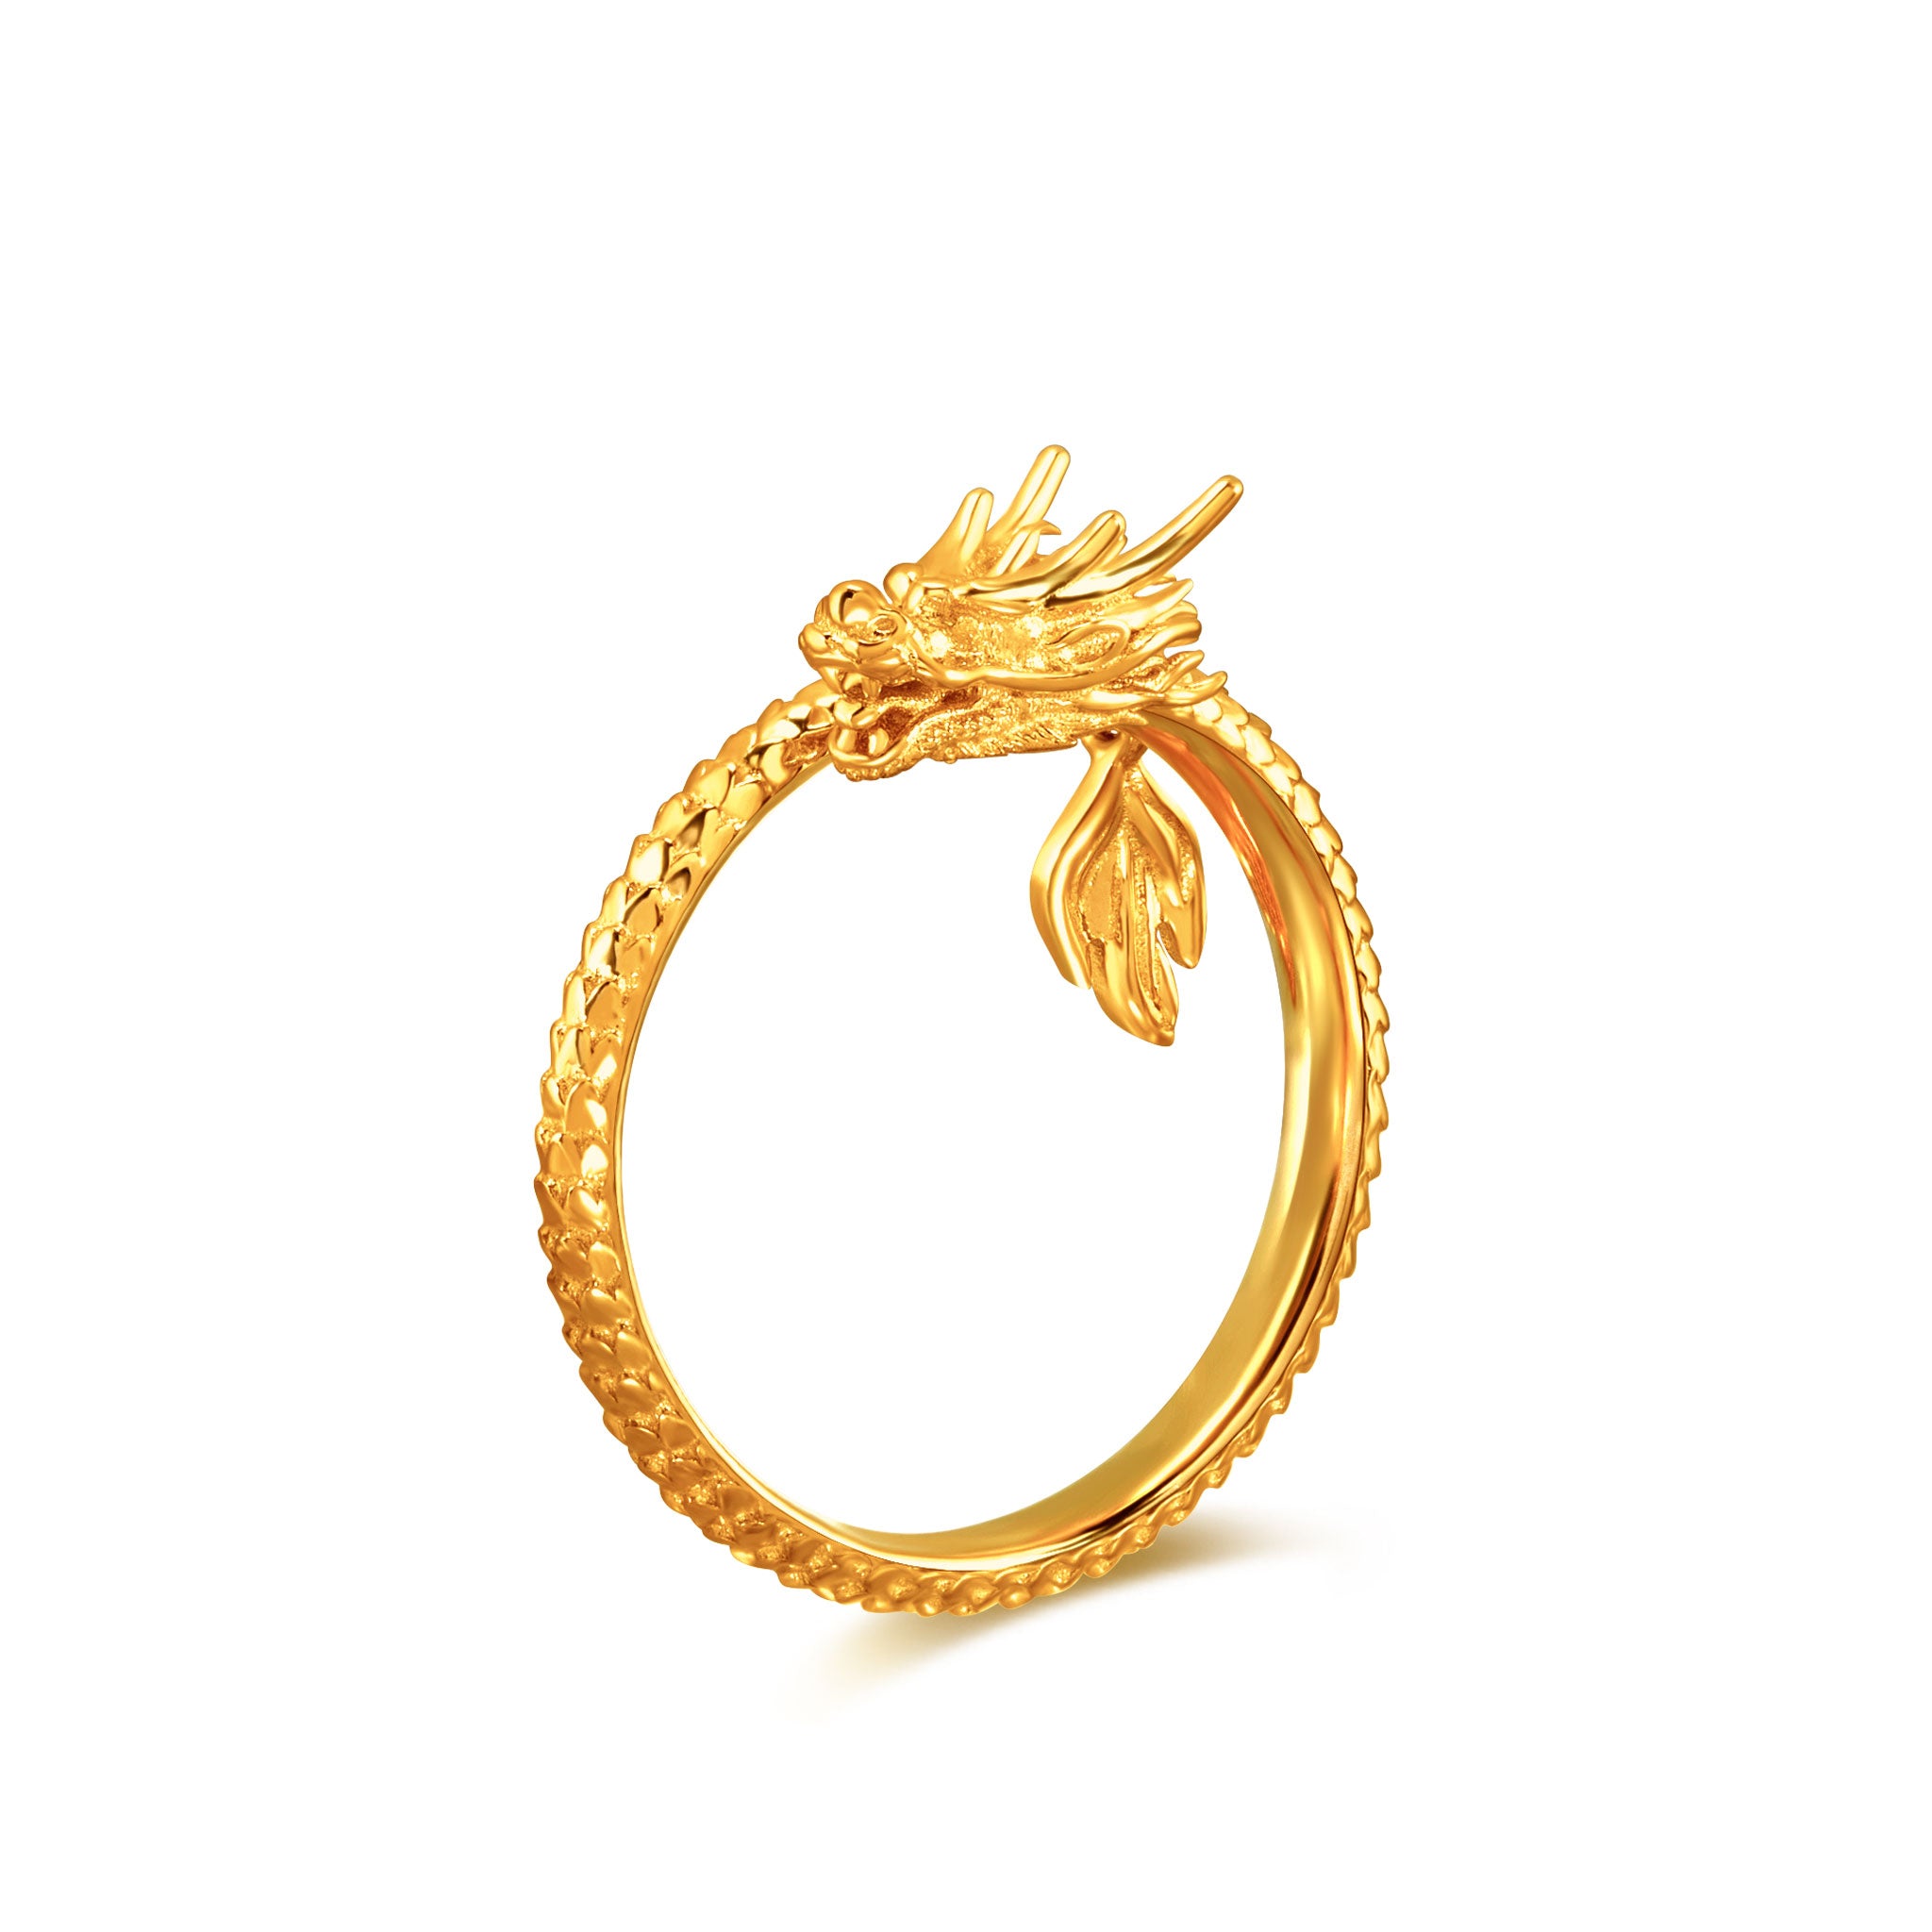 Buy Ethnic Dragon Signet Gold Ring for Men, Statement Ring, Knight Symbol  Ring, Vintage Ring, Boho Ring, Gift for Men, Trending Now Online in India -  Etsy